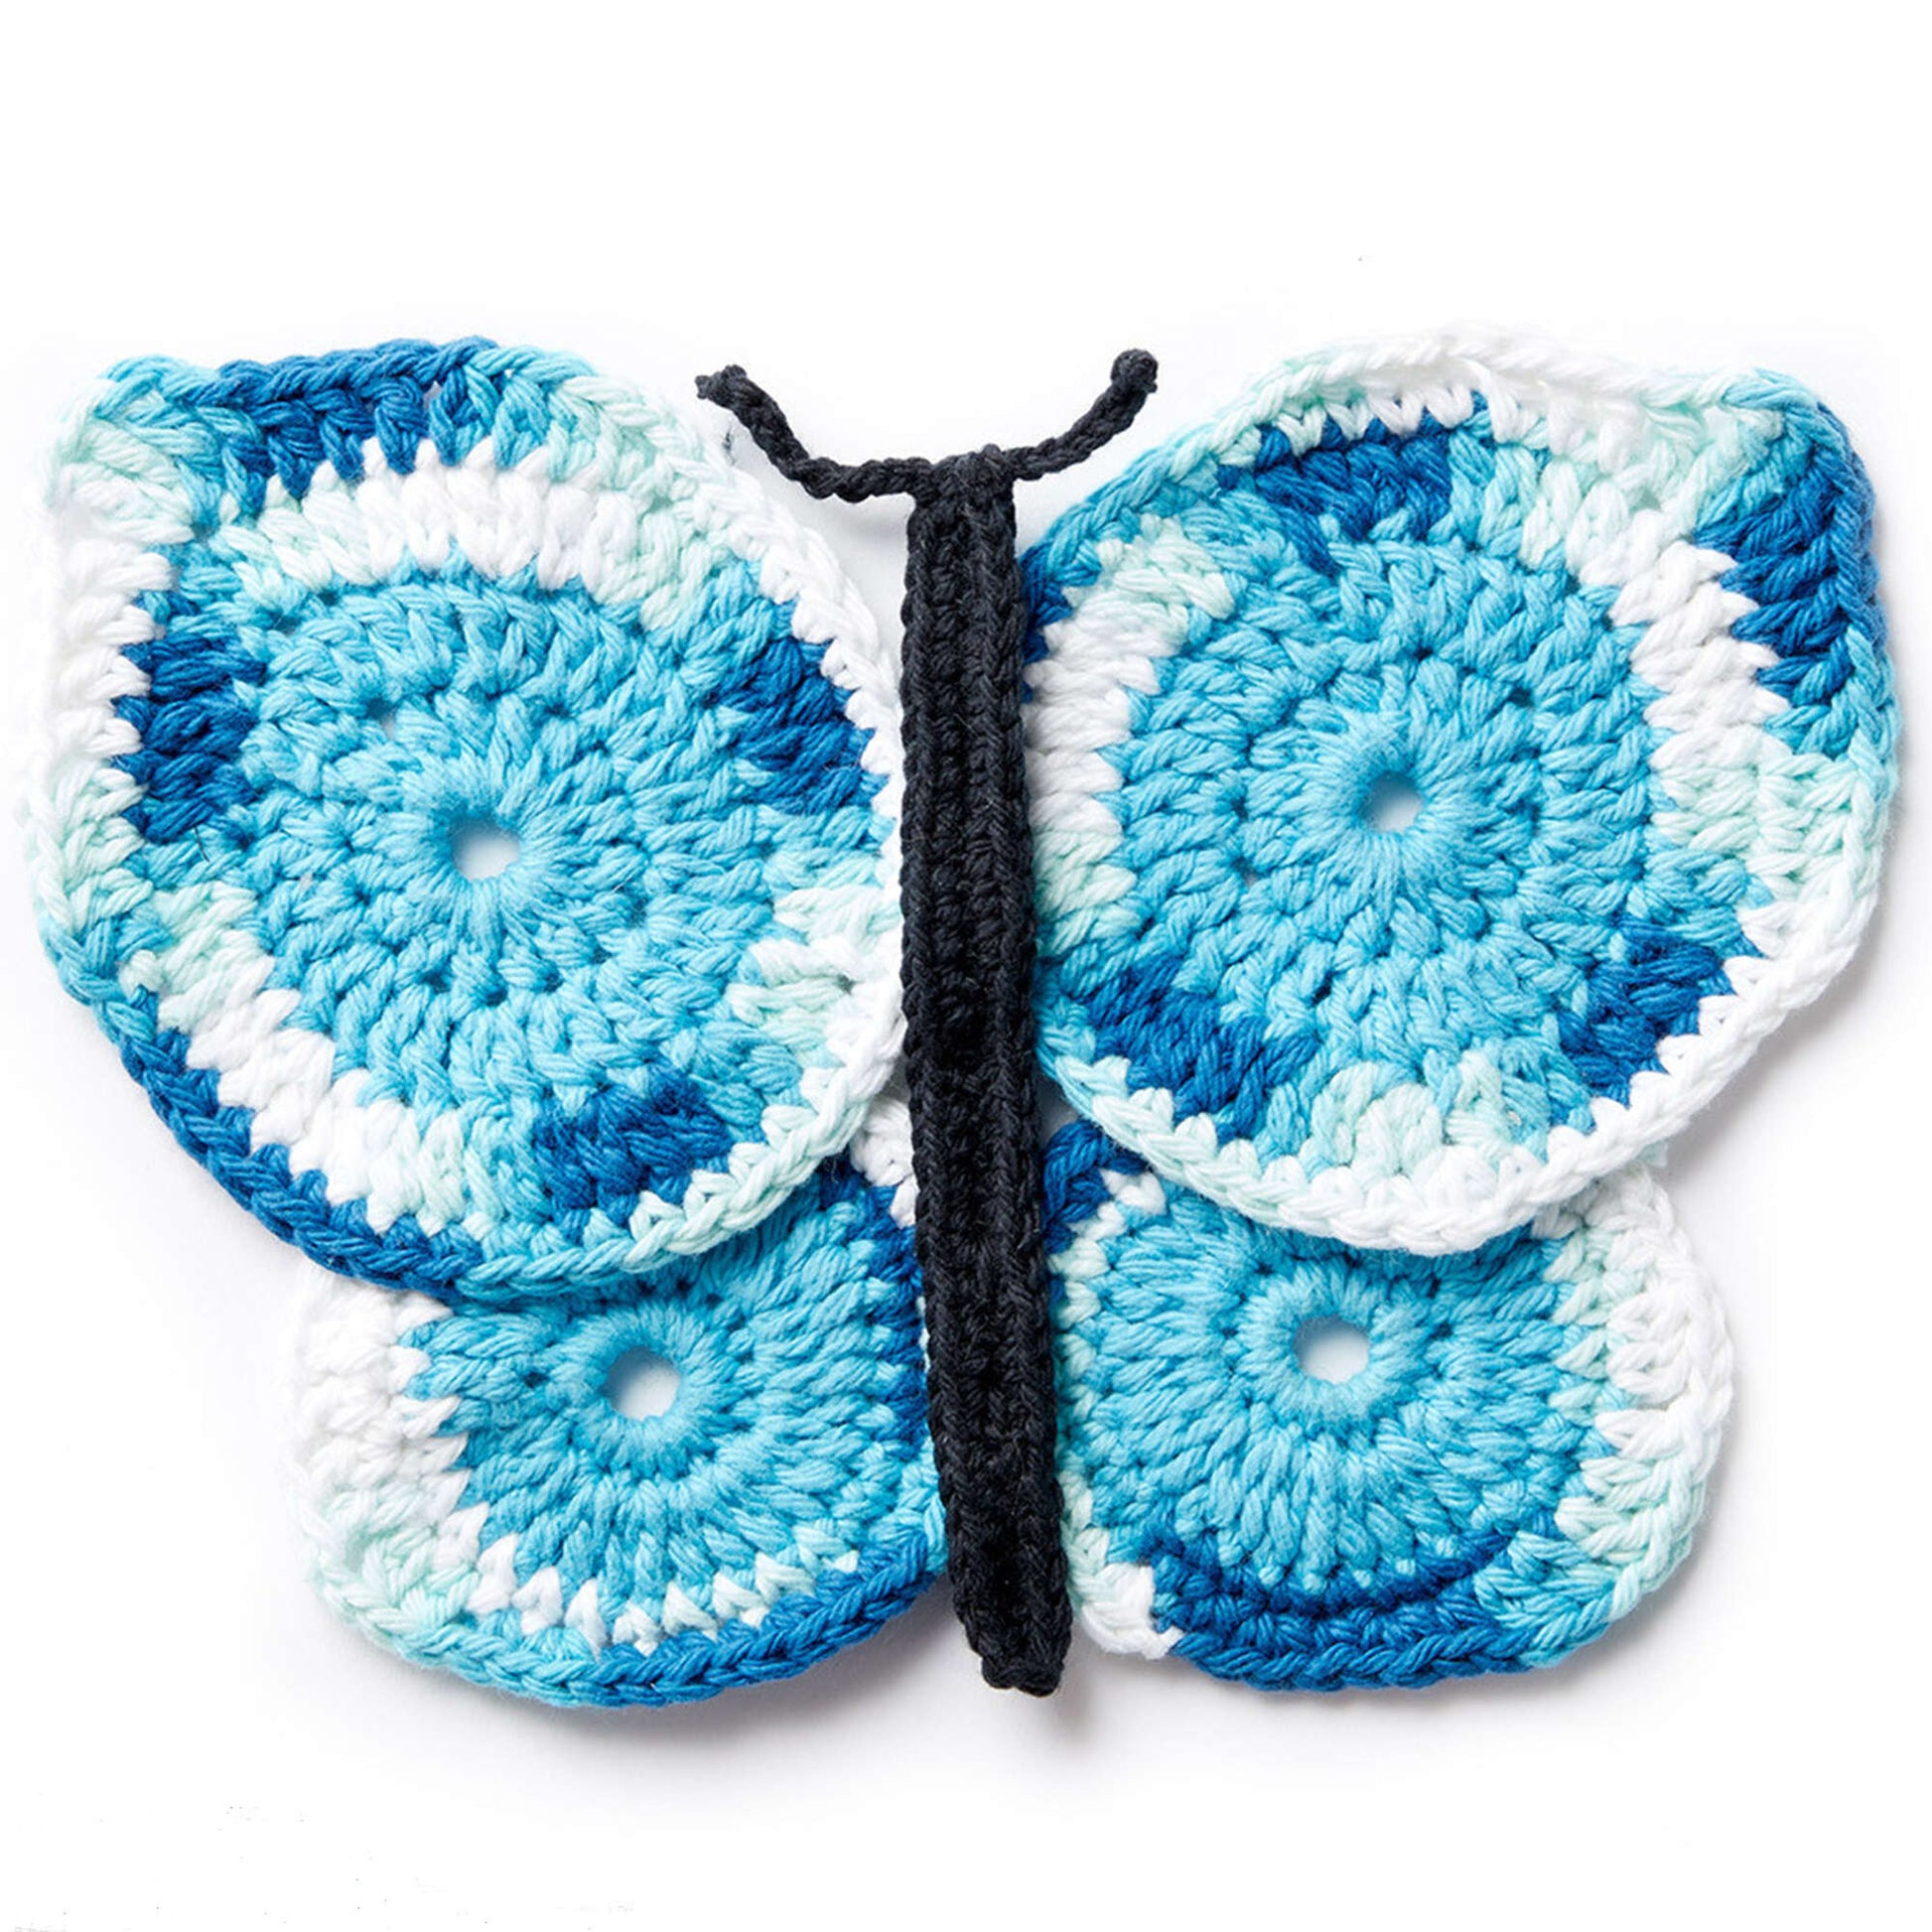 Free Lily Sugar'n Cream Butterfly Crochet Dishcloth Pattern